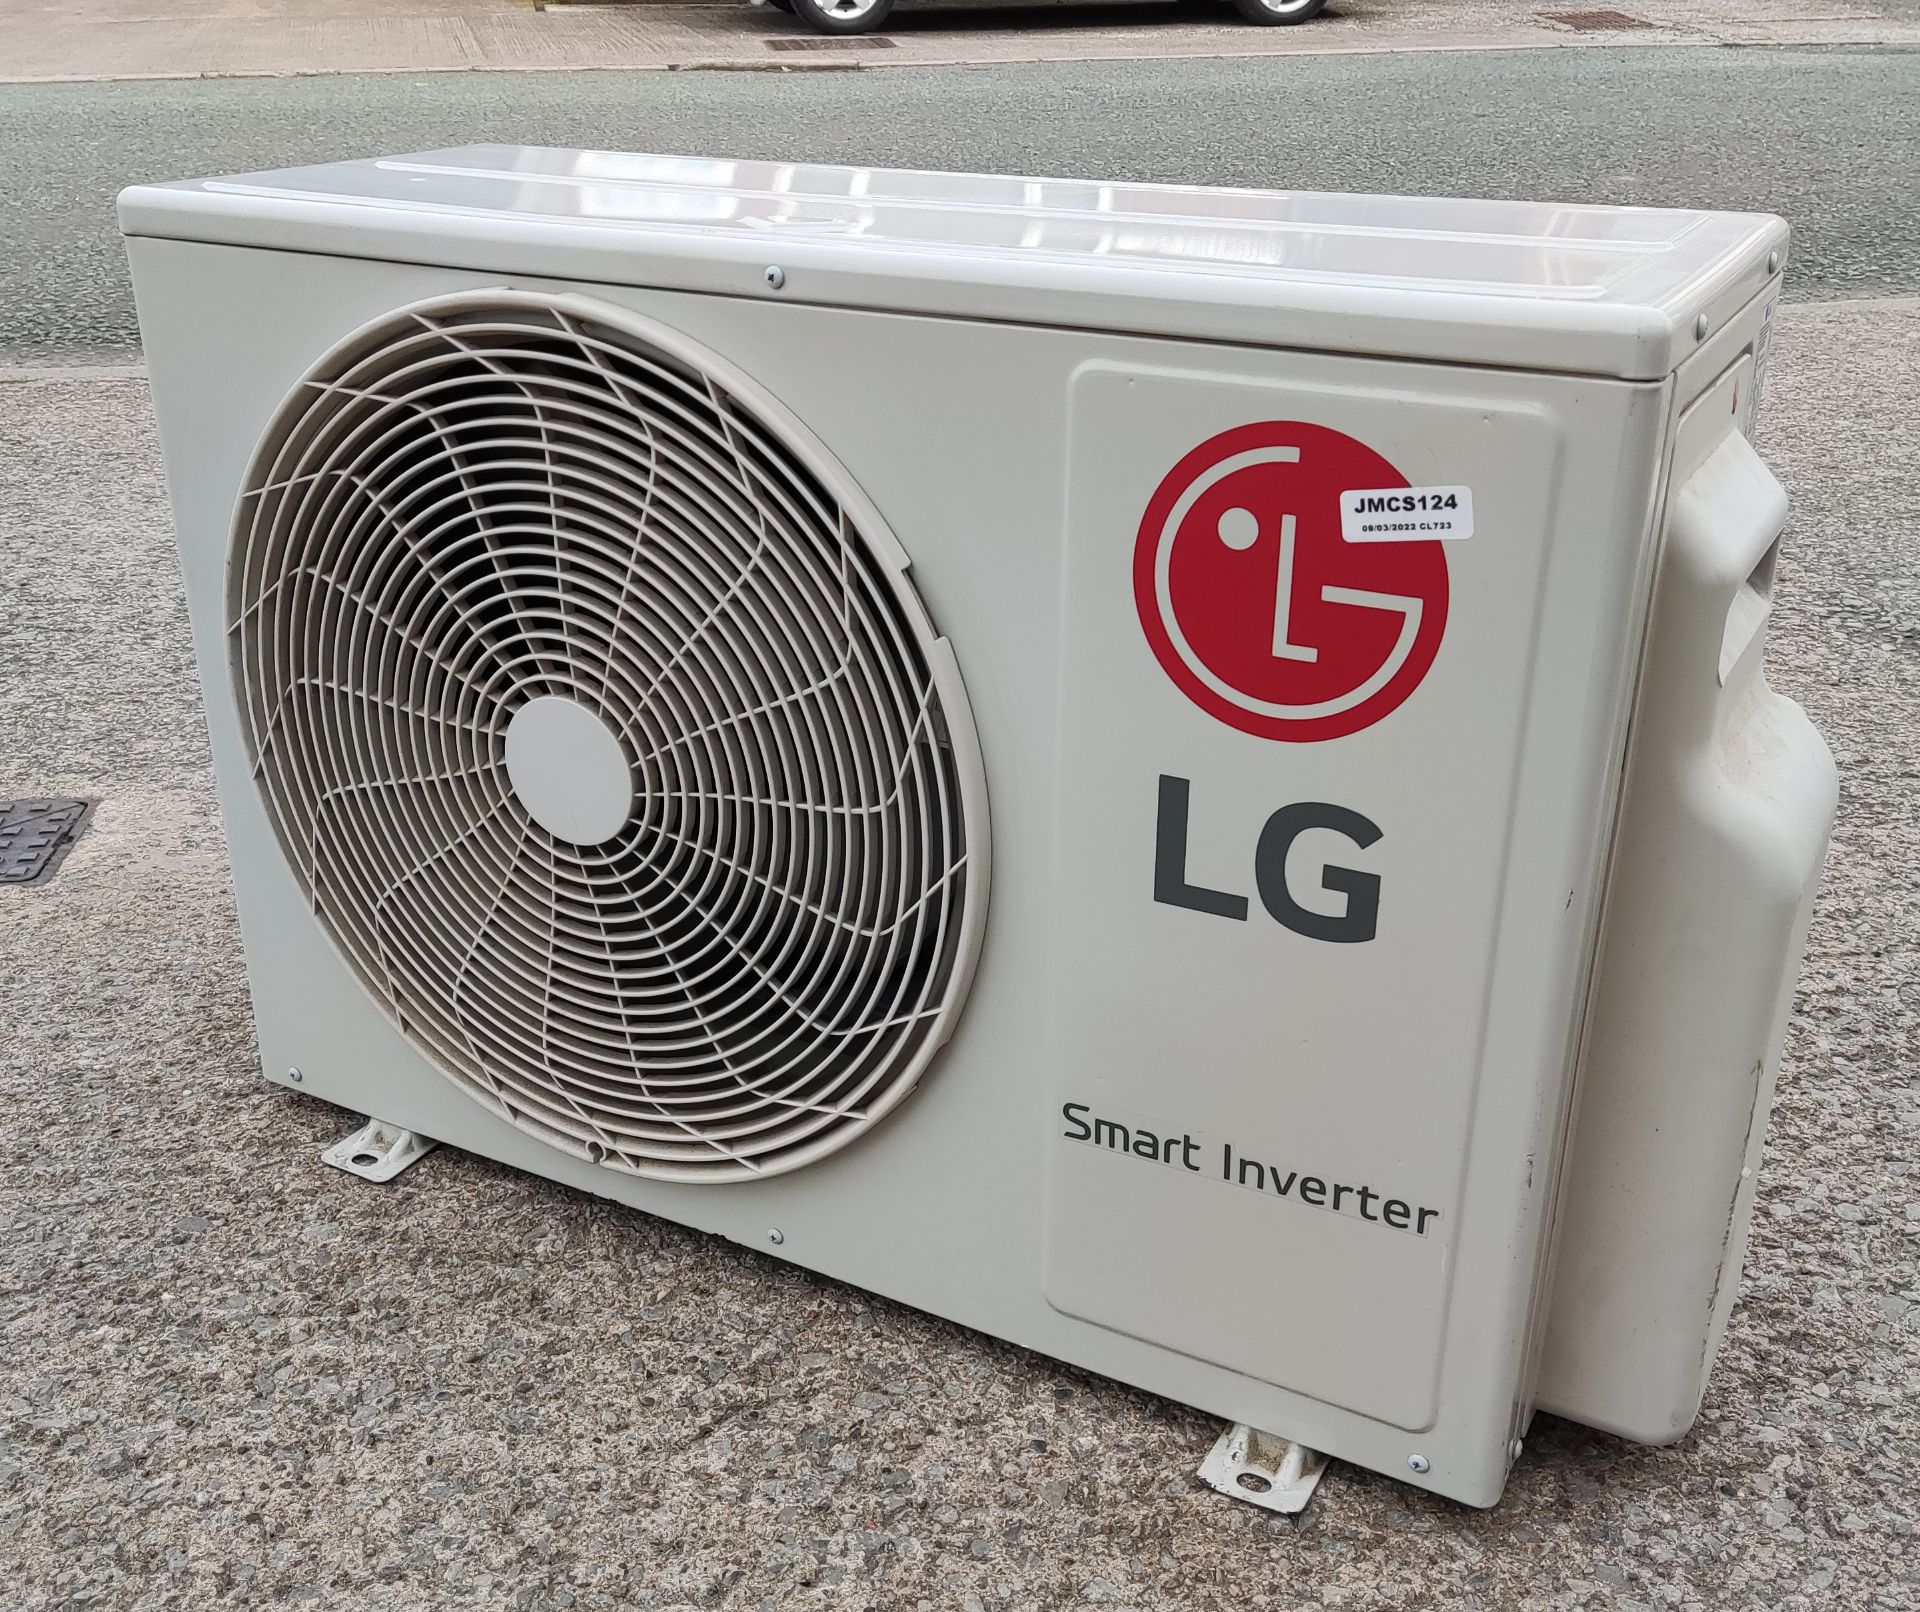 1 x LG Smart Inverter Split Room Air Conditioner - Model: P18EN.UL2 - JMCS124 - CL723 - Location: - Image 2 of 7